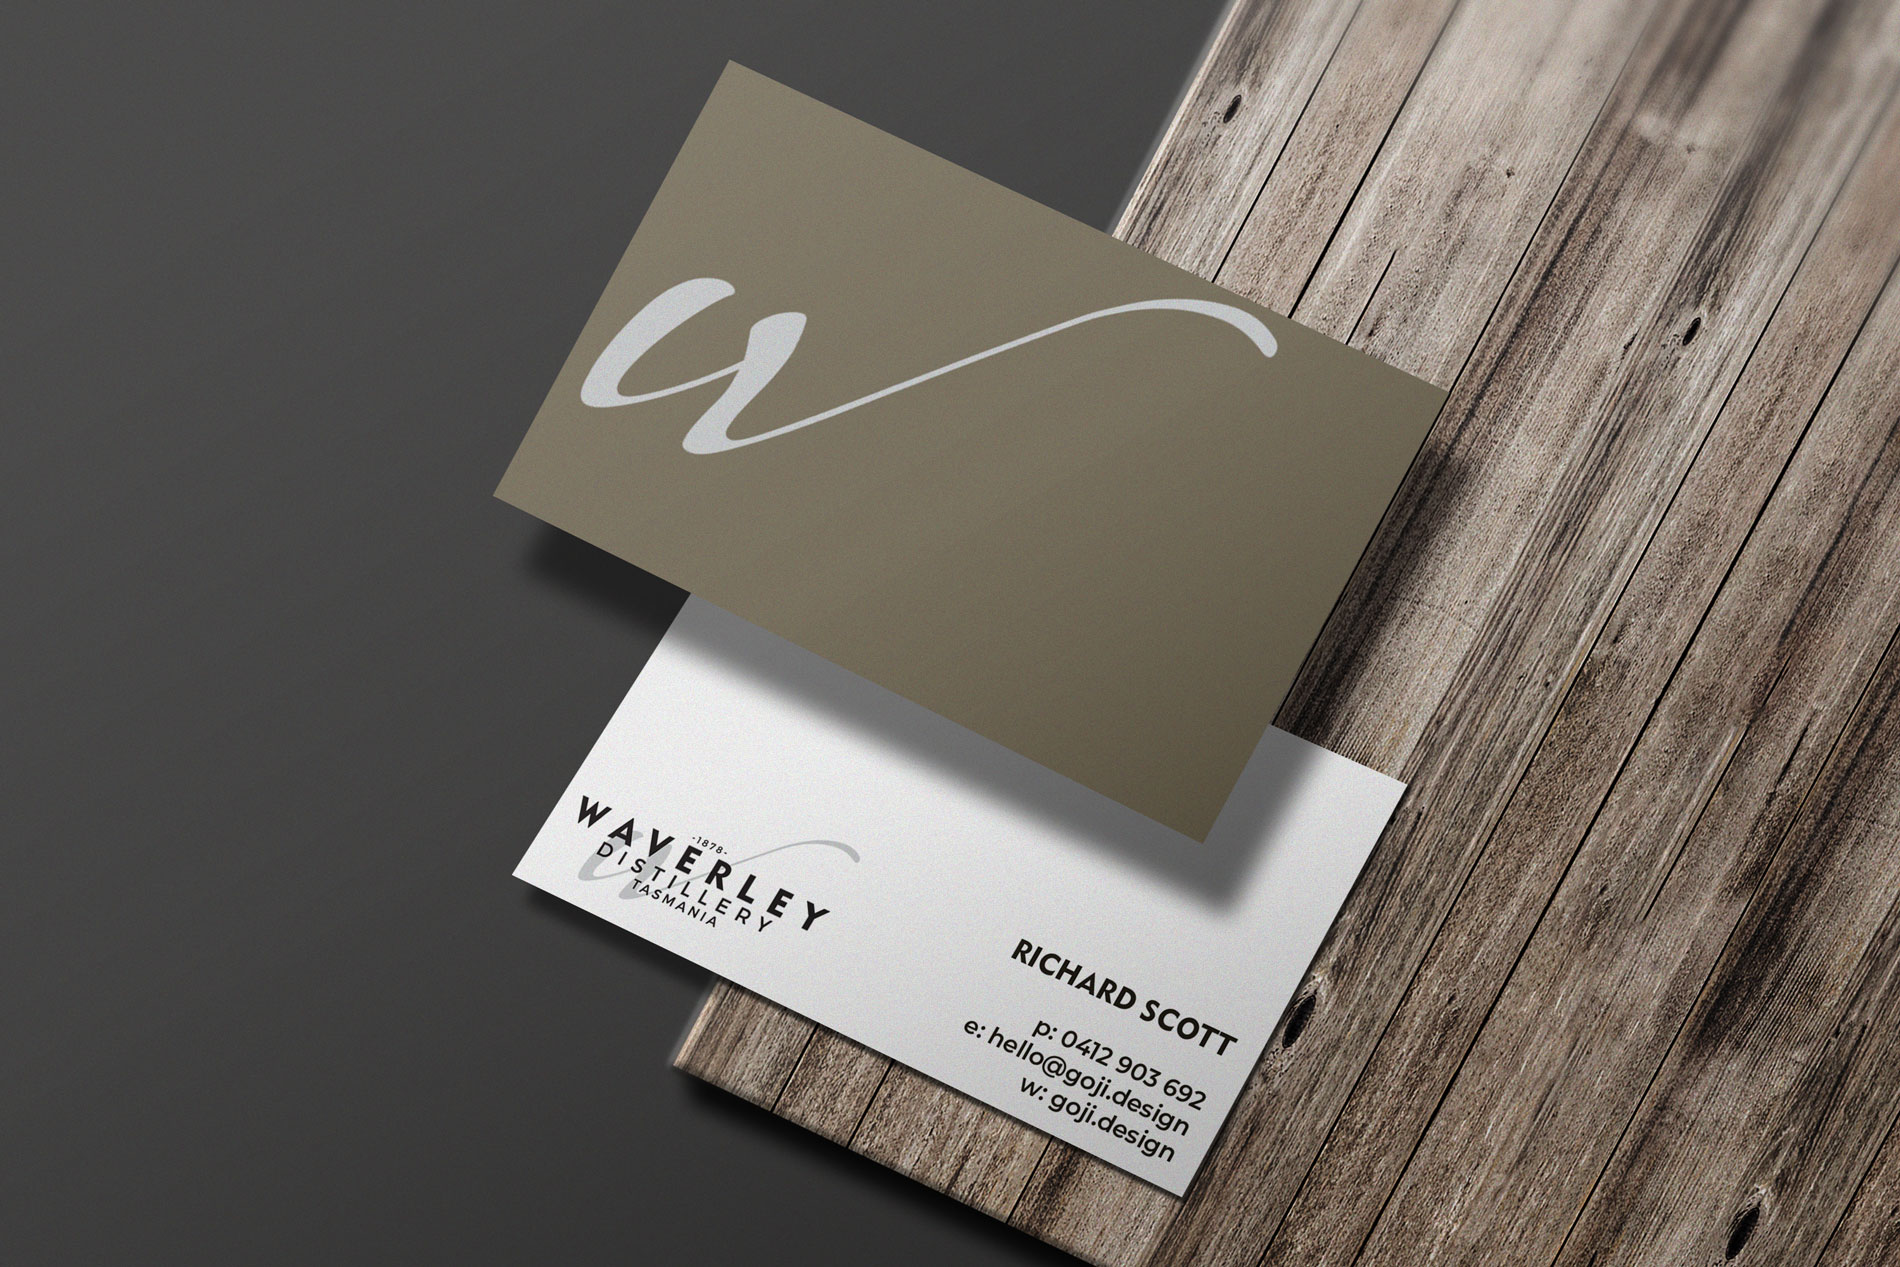 Waverley Design And Business Card Mockup